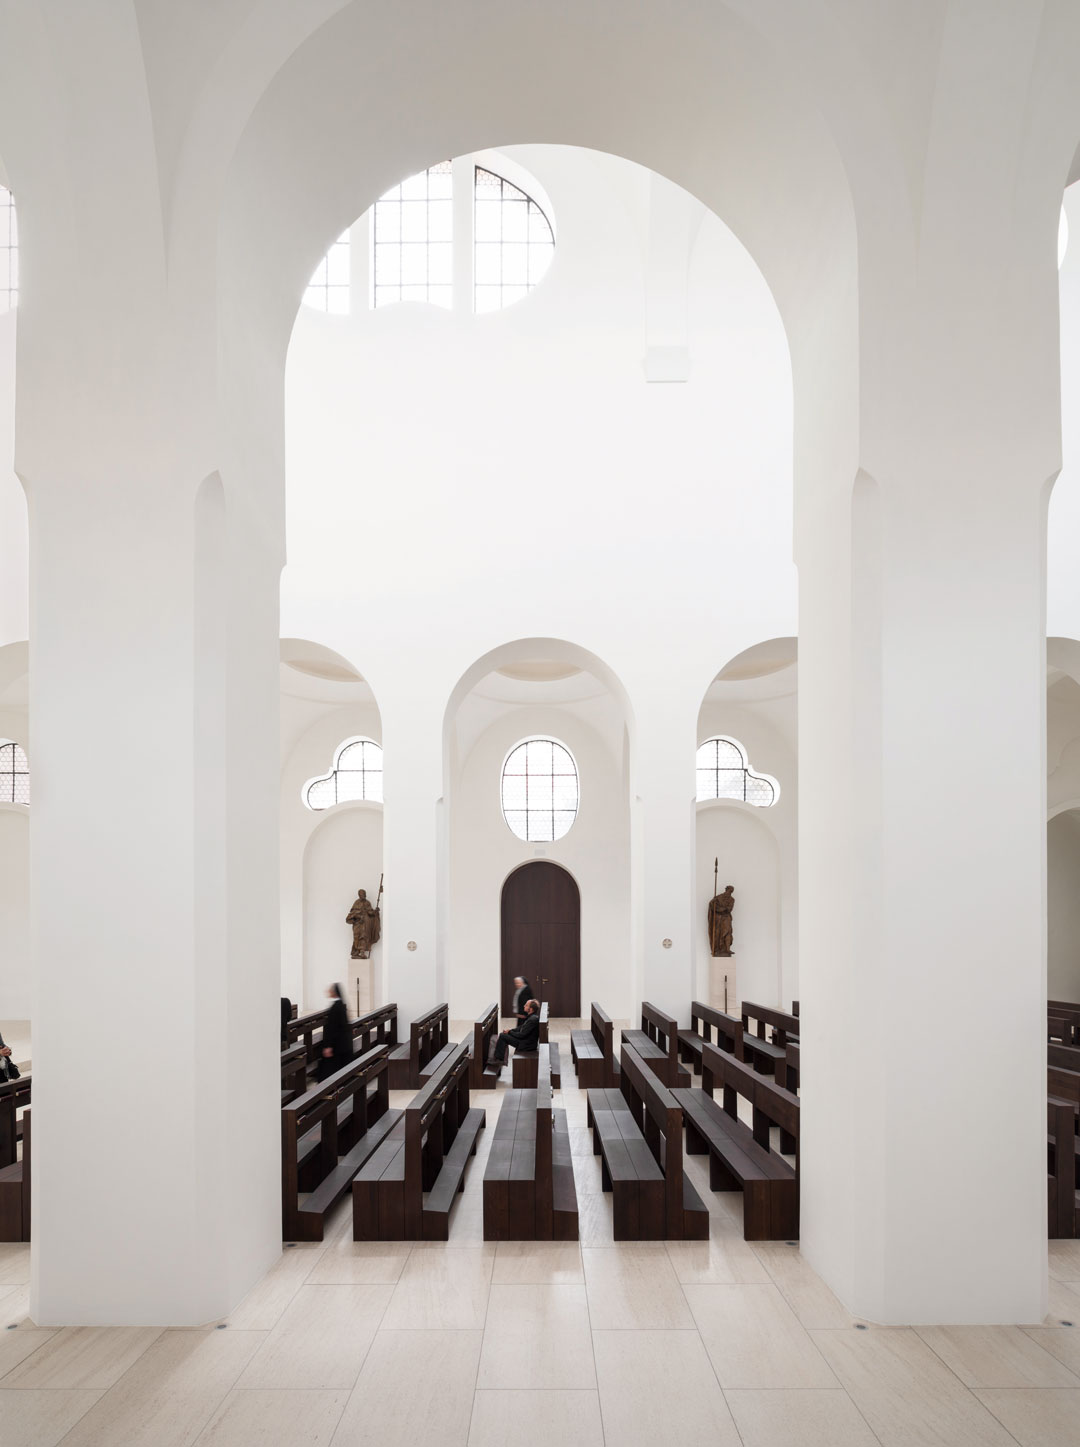 St Moritz Church, Augsburg, Germany